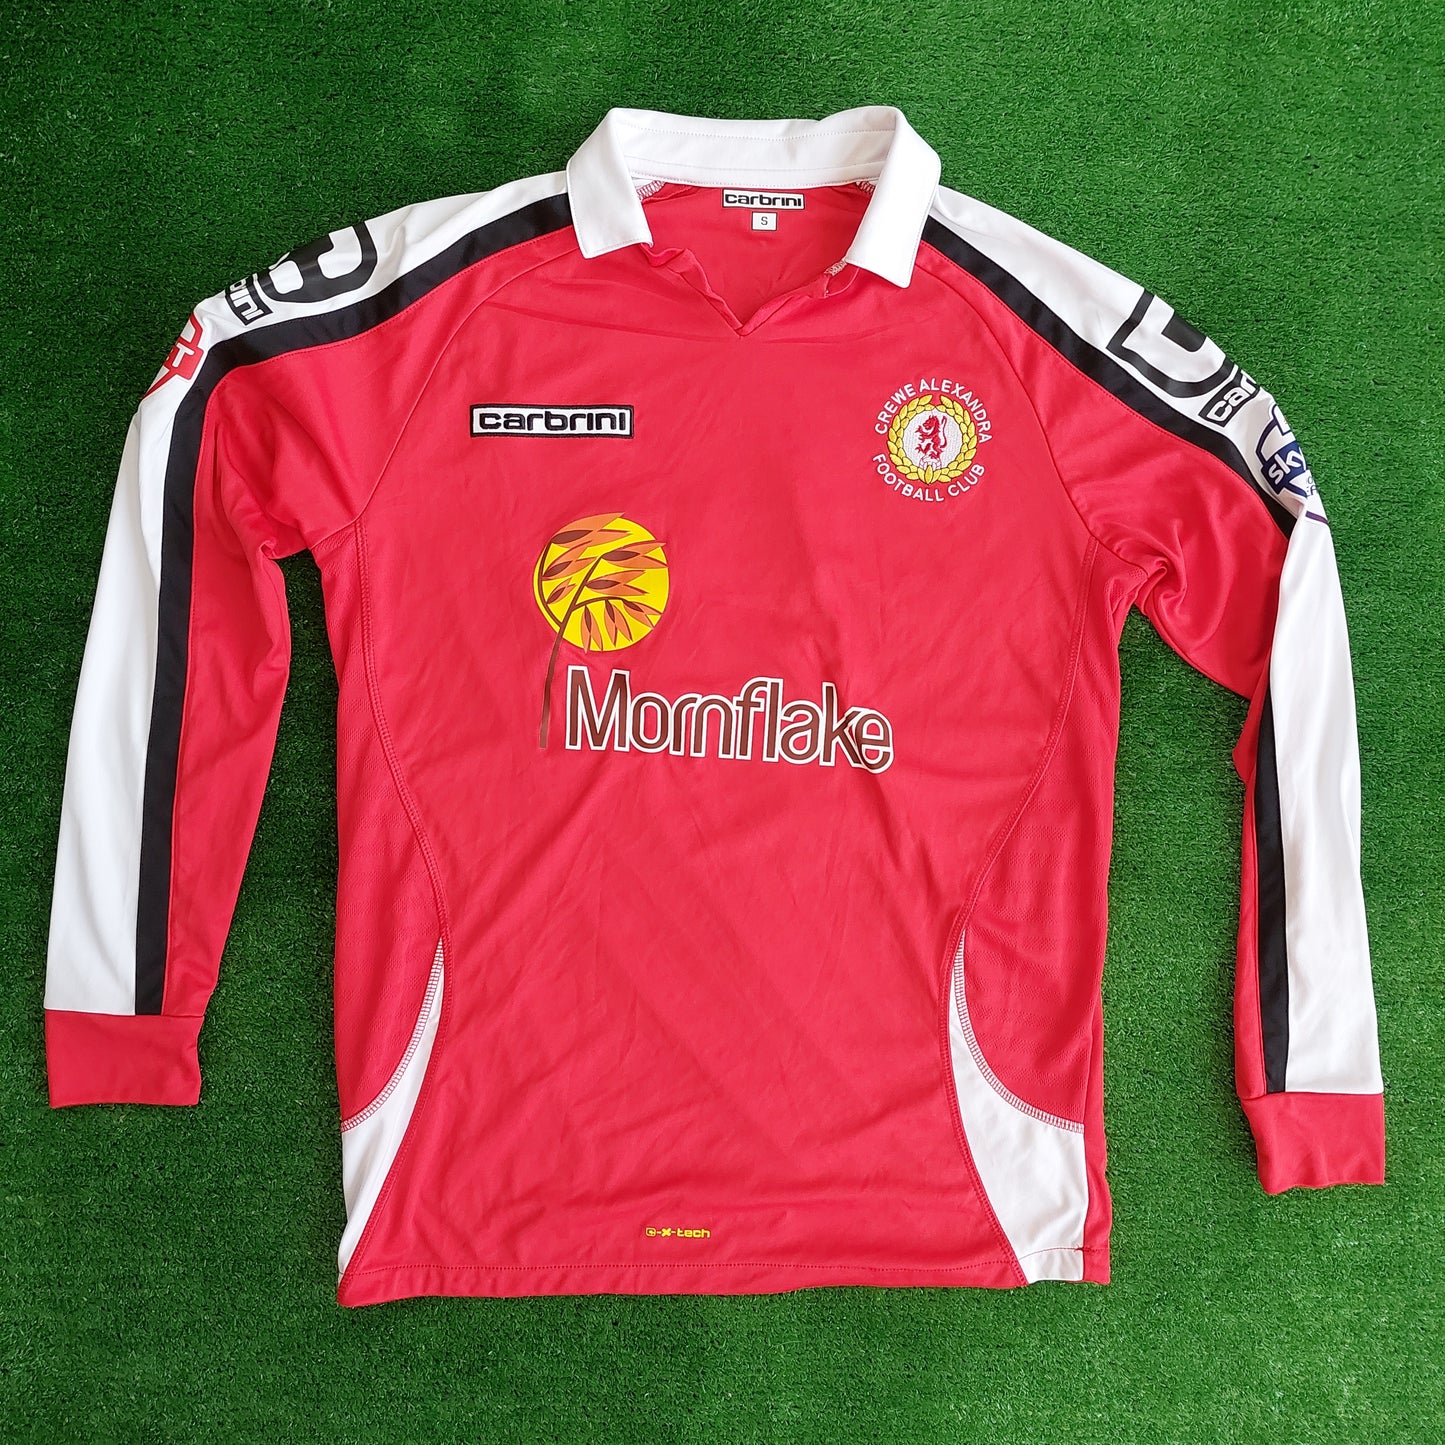 Crewe Alexandra 2014/15 L/S #7 Turton Home Shirt (Excellent) - Size S